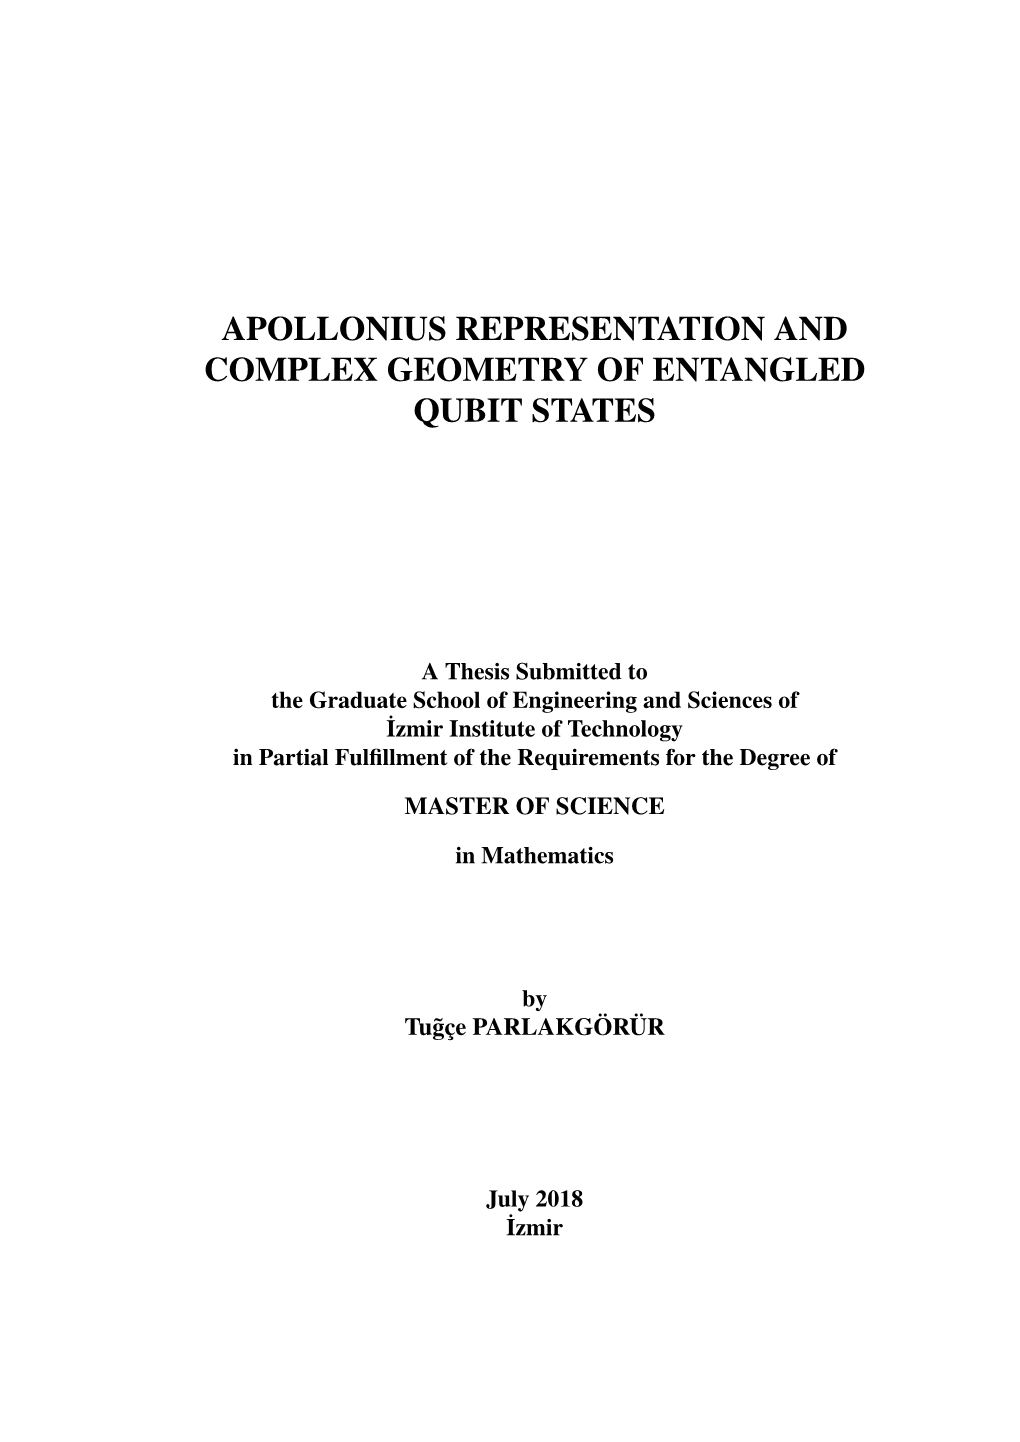 Apollonius Representation and Complex Geometry of Entangled Qubit States